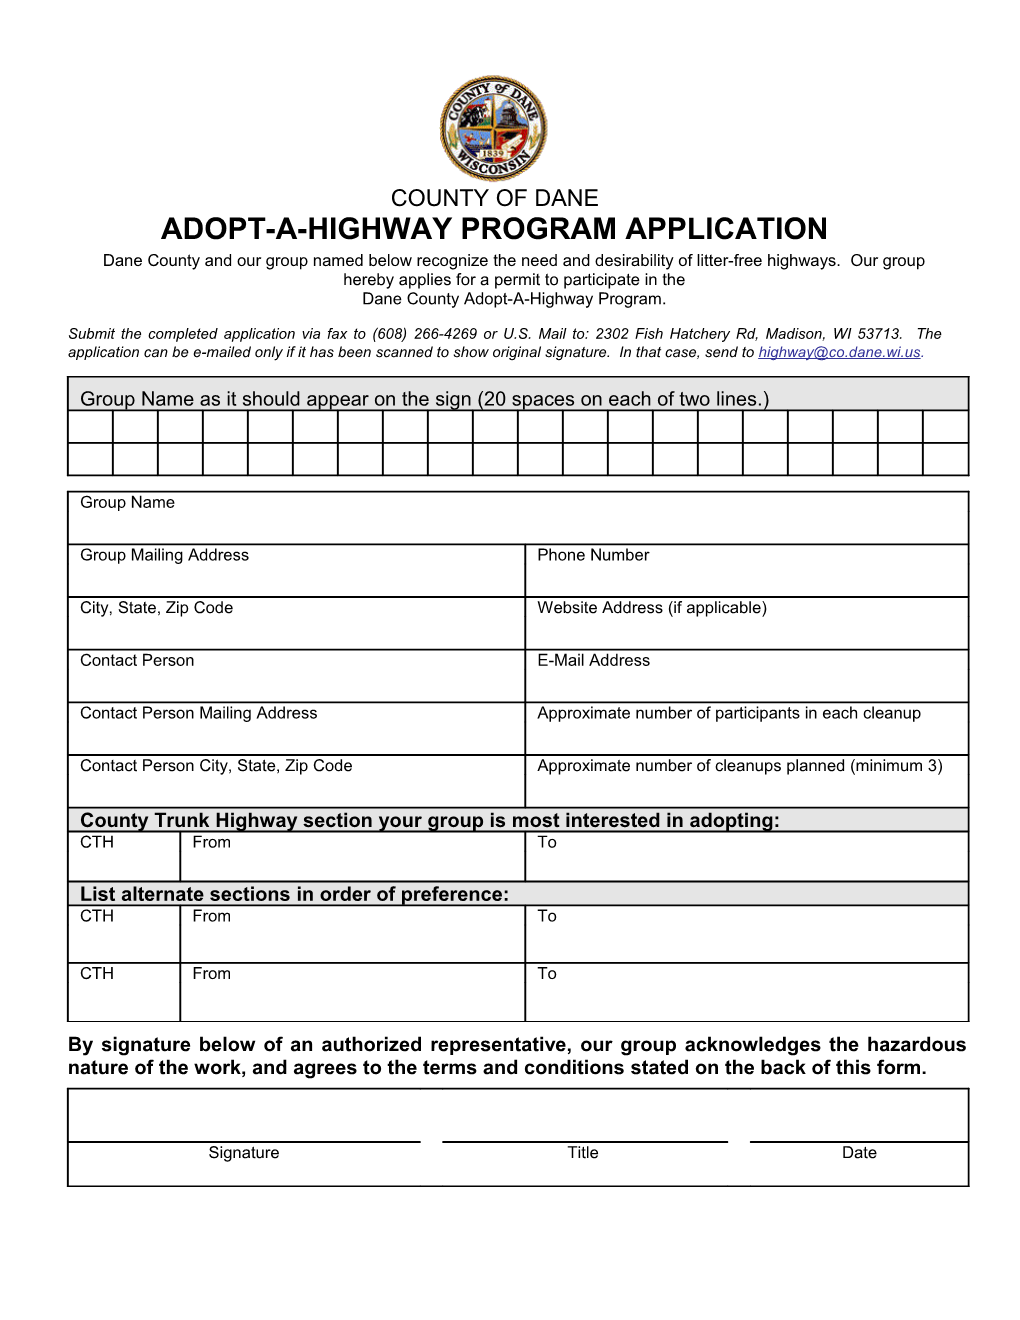 Dane County Adopt-A-Highway Program